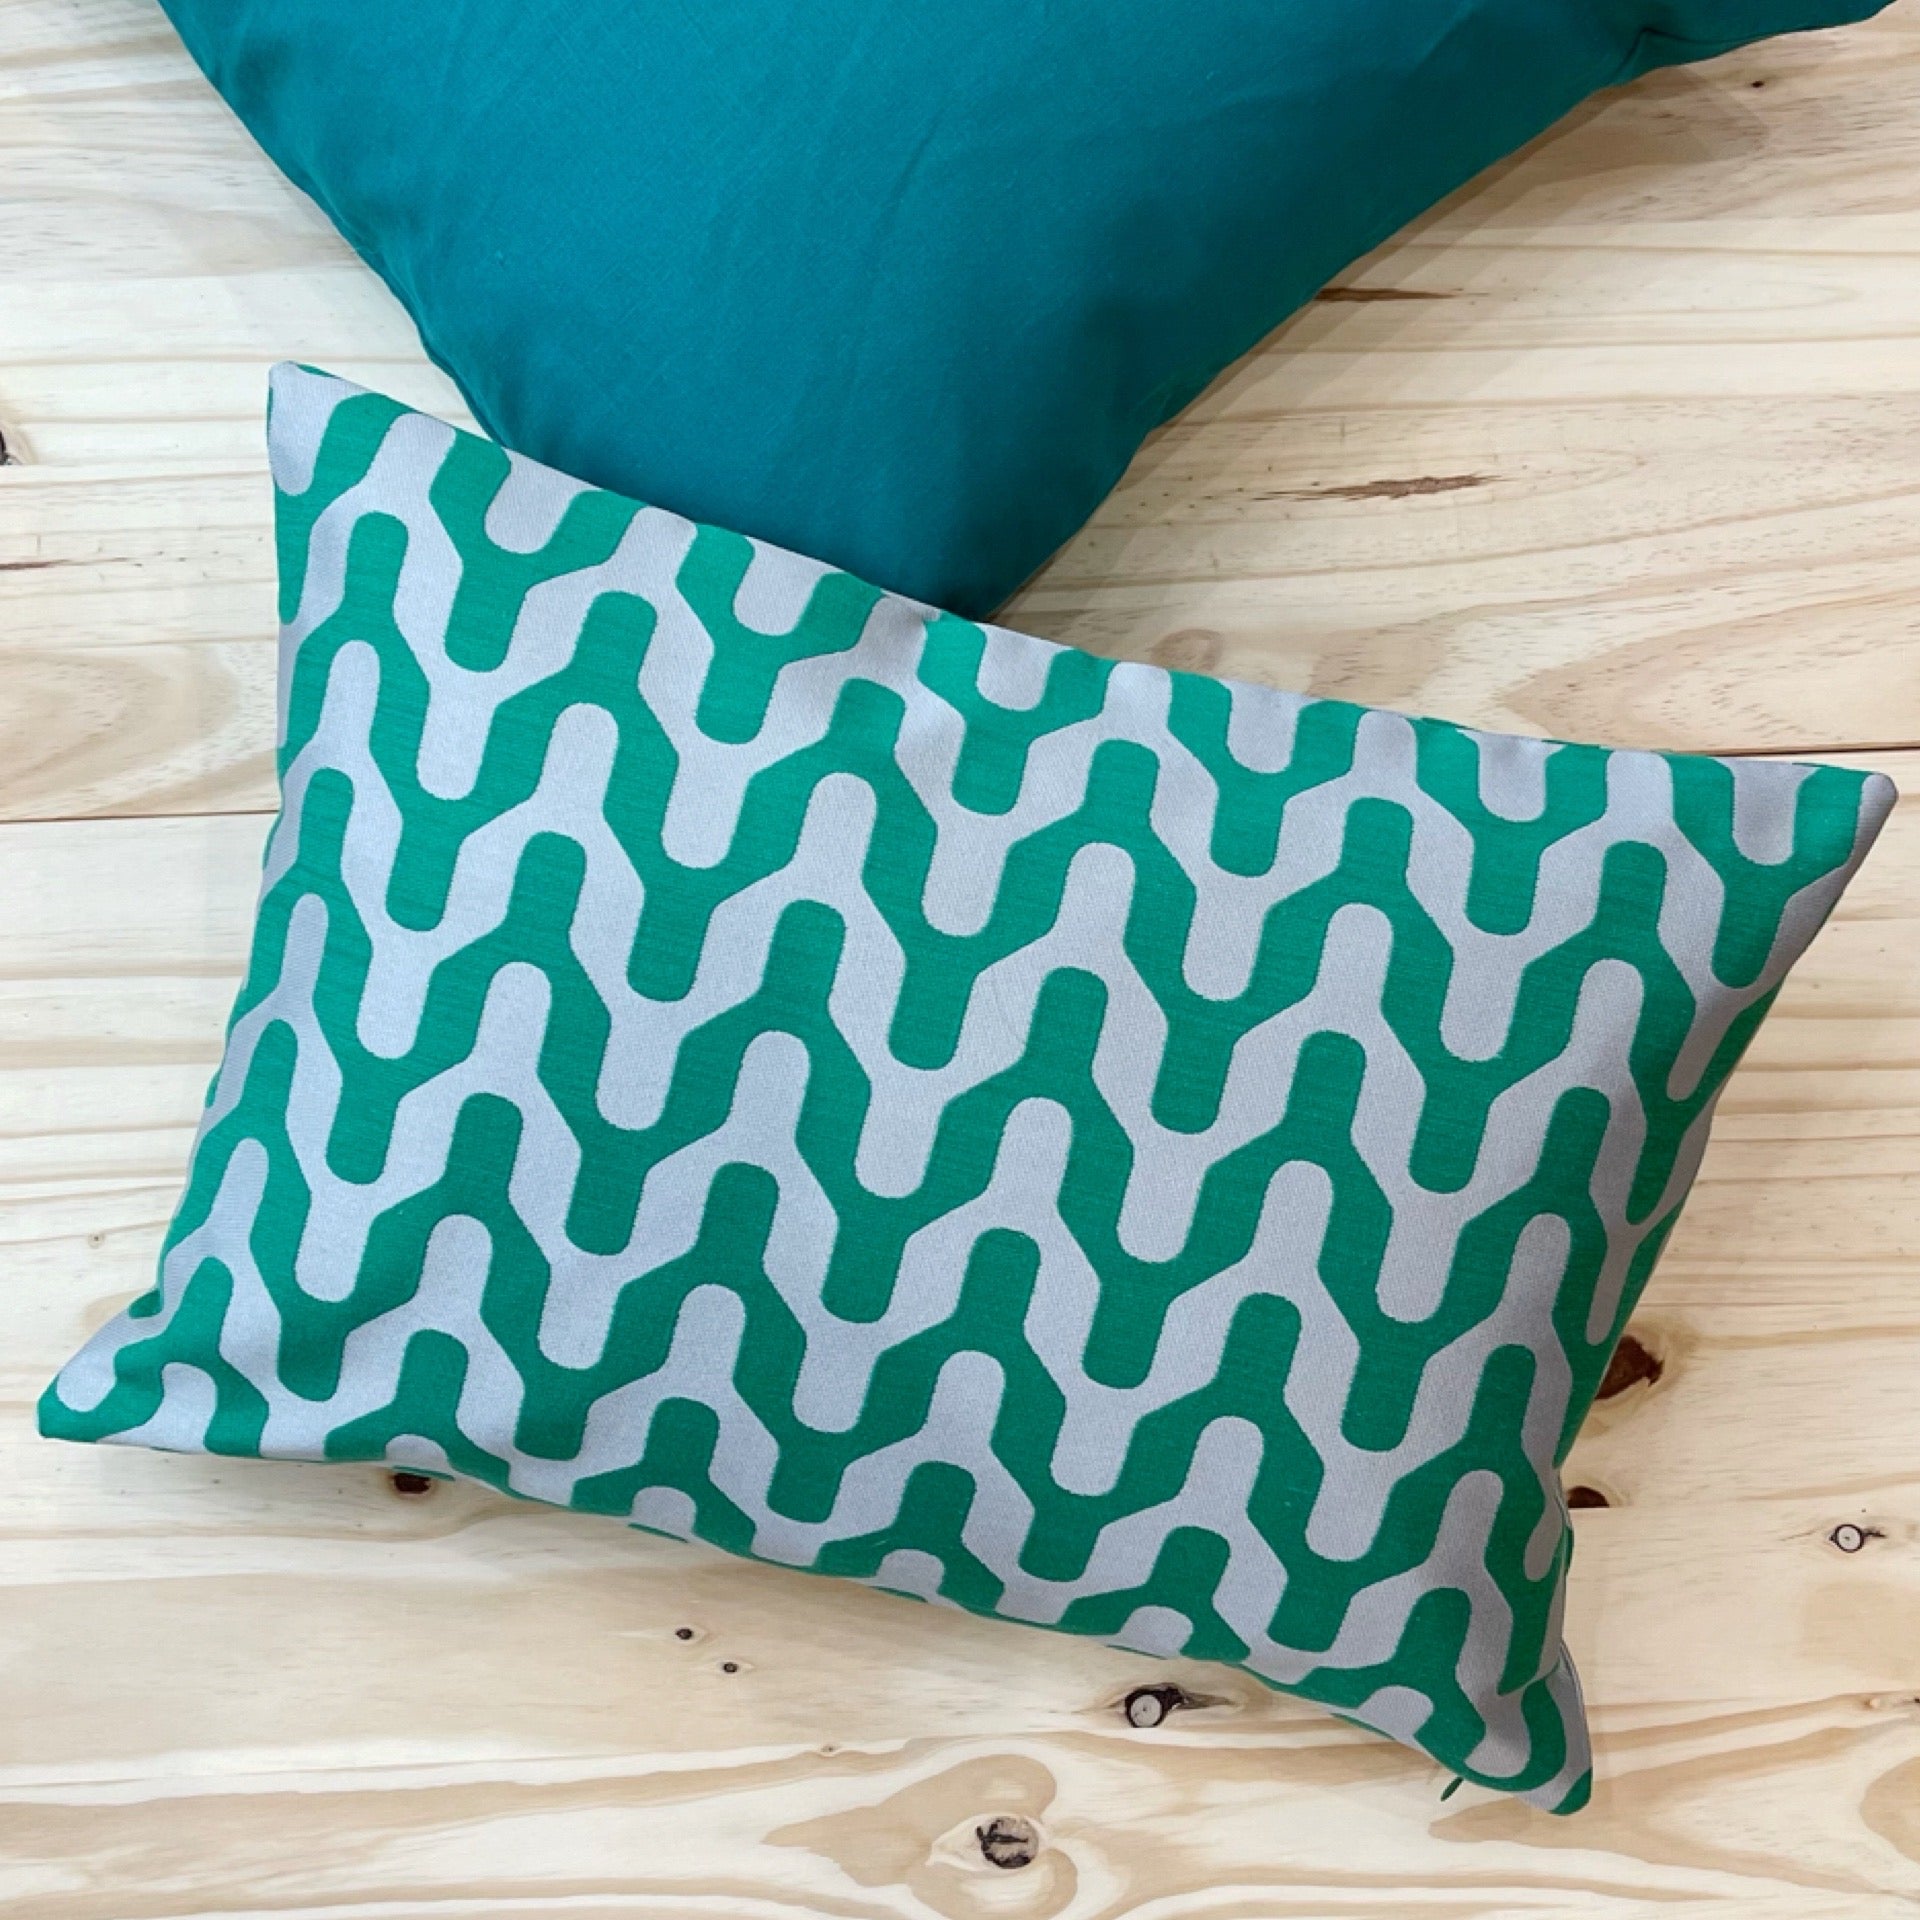 Santi Lumber Pillow - Emerald green - 20" x 14"